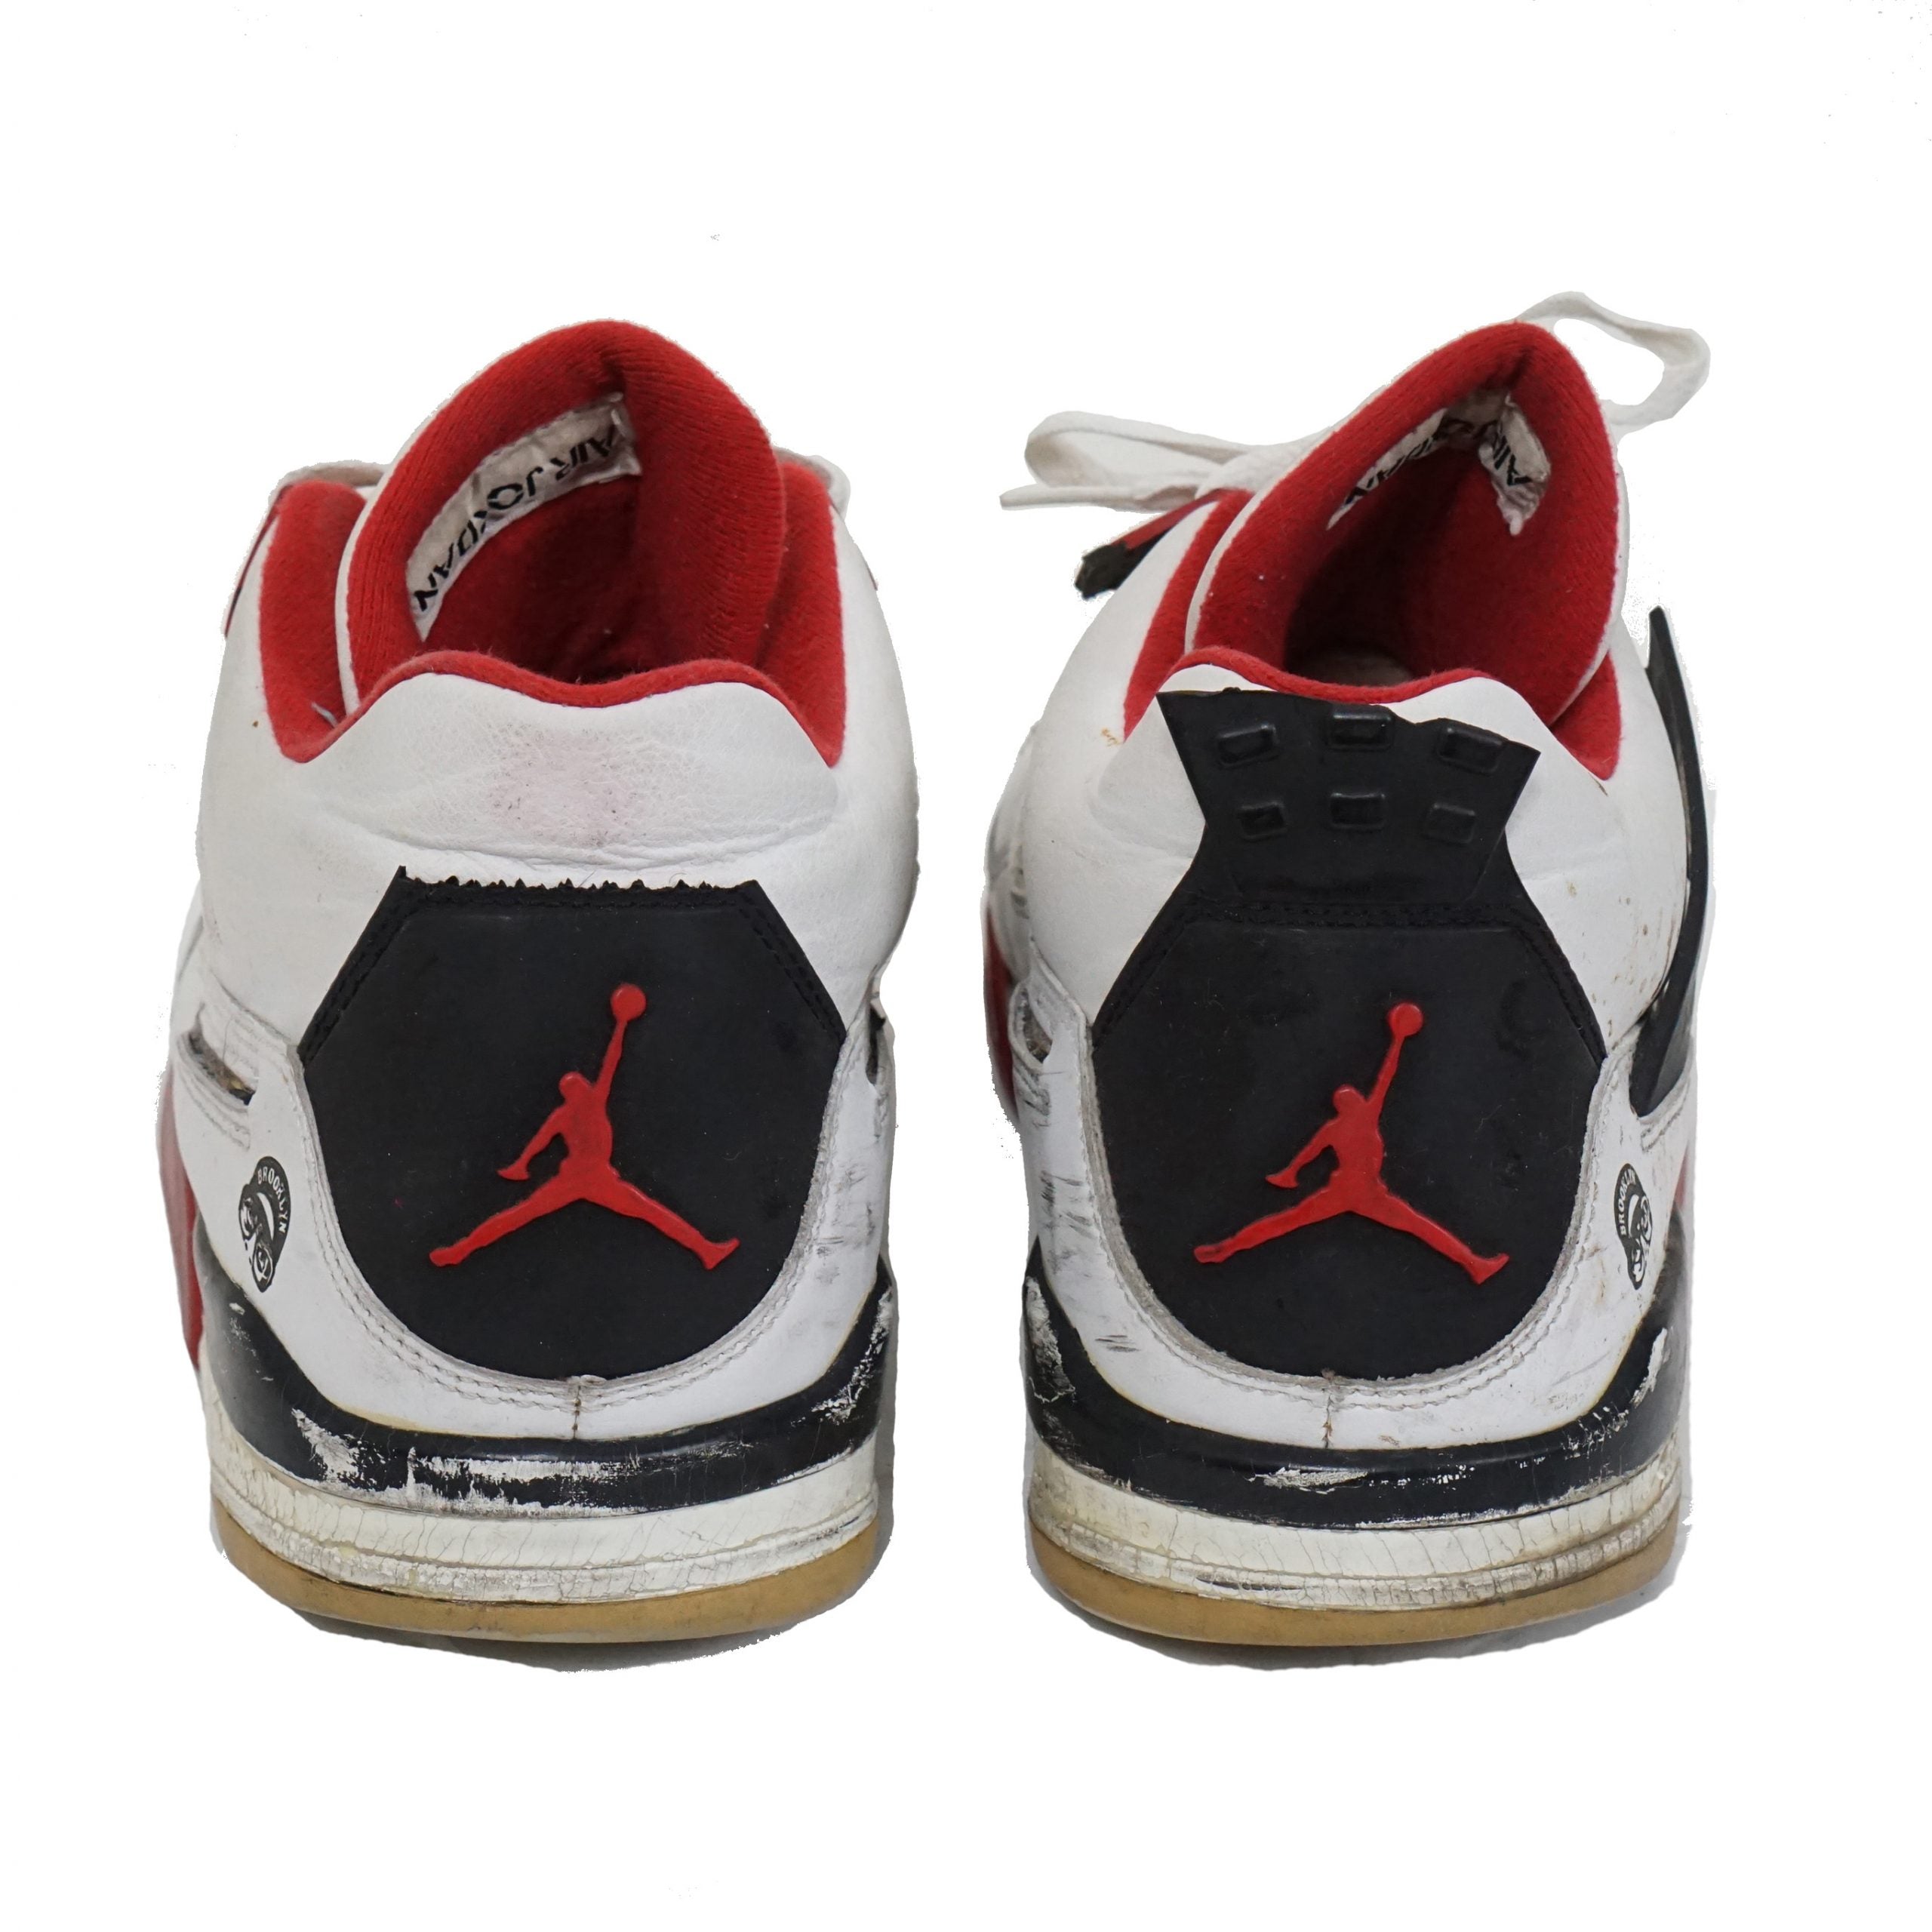 NIKE Air Jordan Flight 4 Mars Fire Red Sneakers by Click On Trend